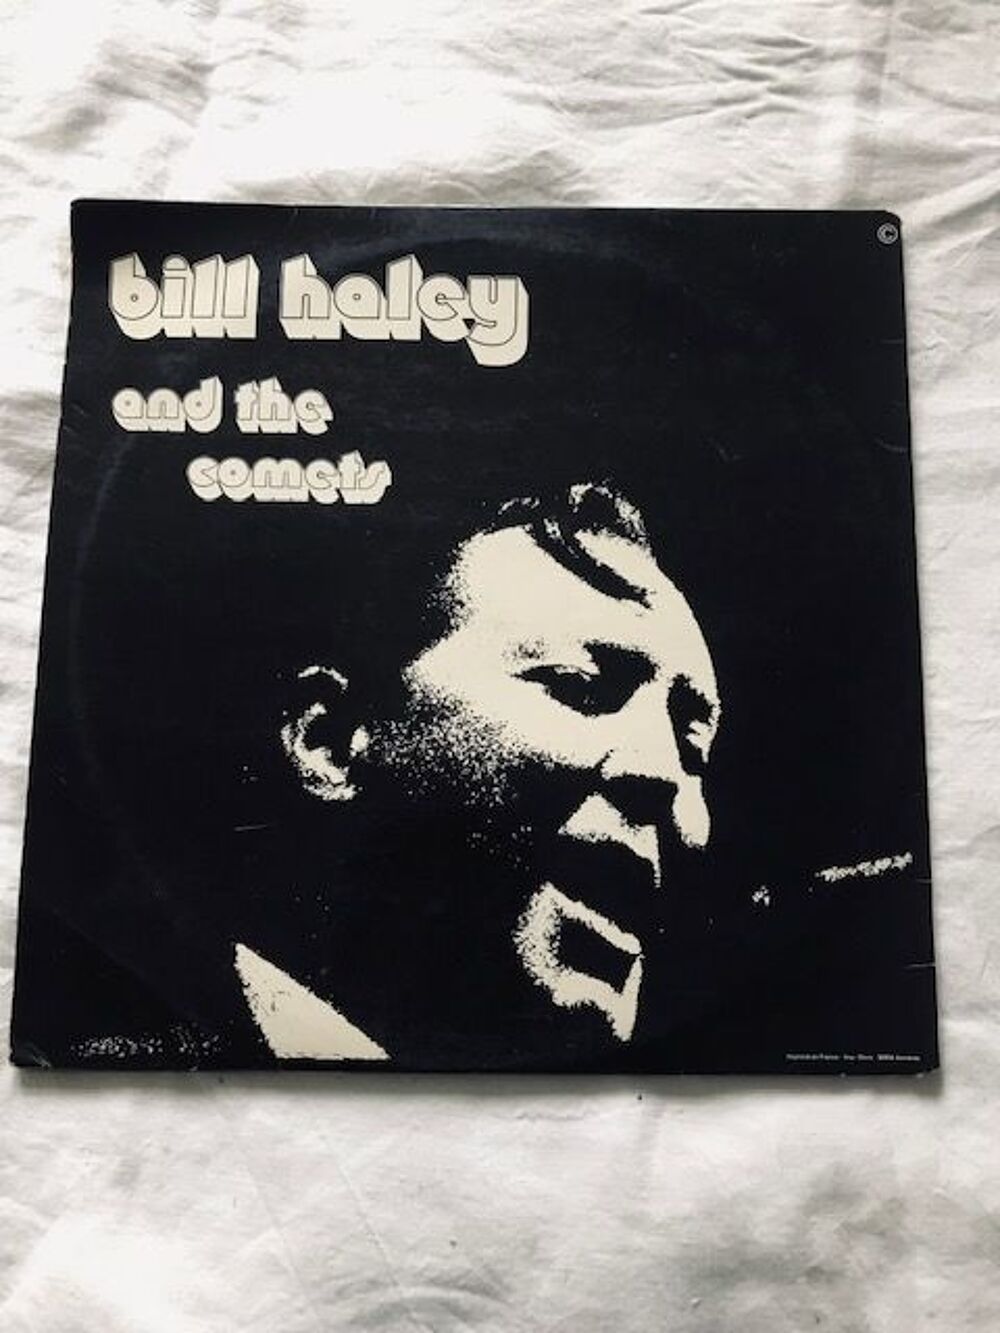 Double LP Bill Haley and the comets CD et vinyles